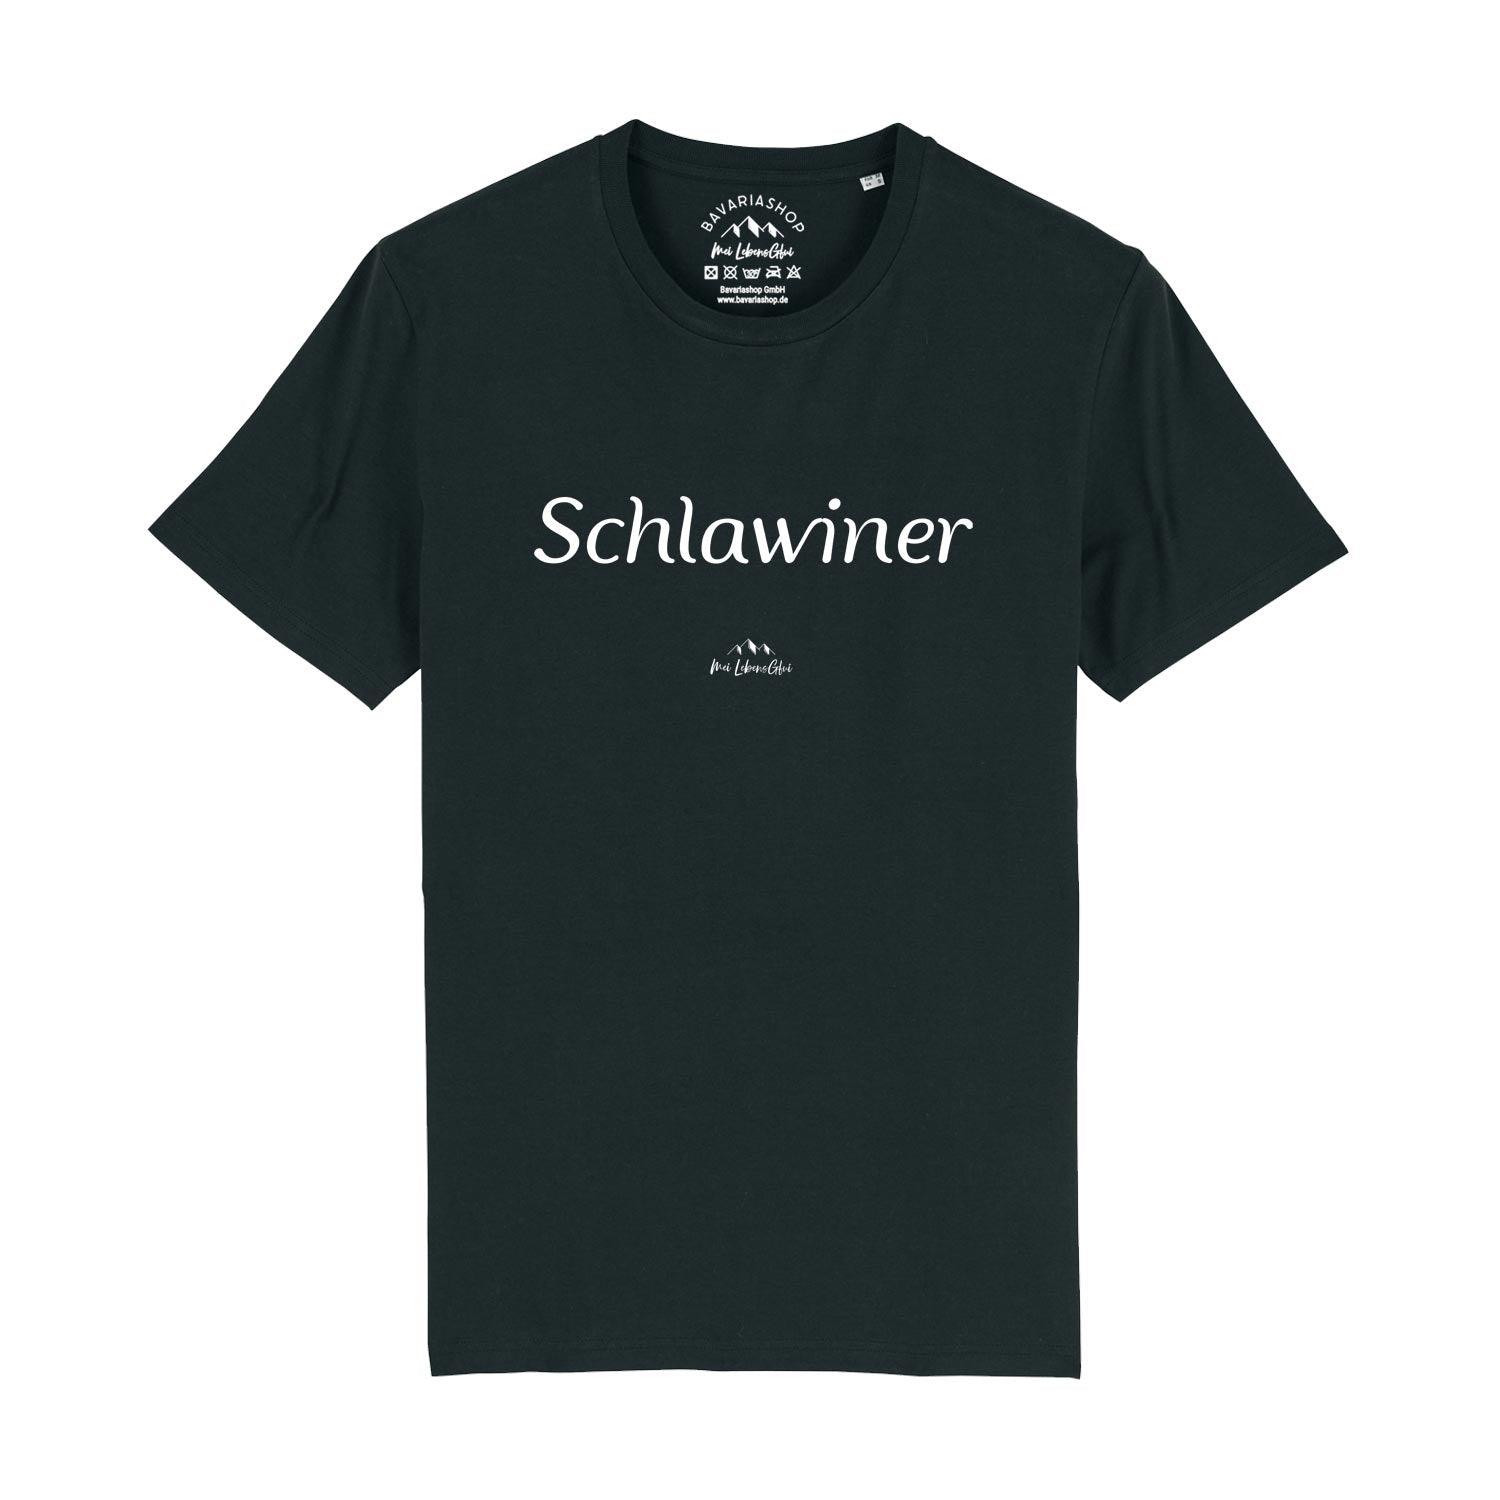 Herren T-Shirt "Schlawiner" - bavariashop - mei LebensGfui